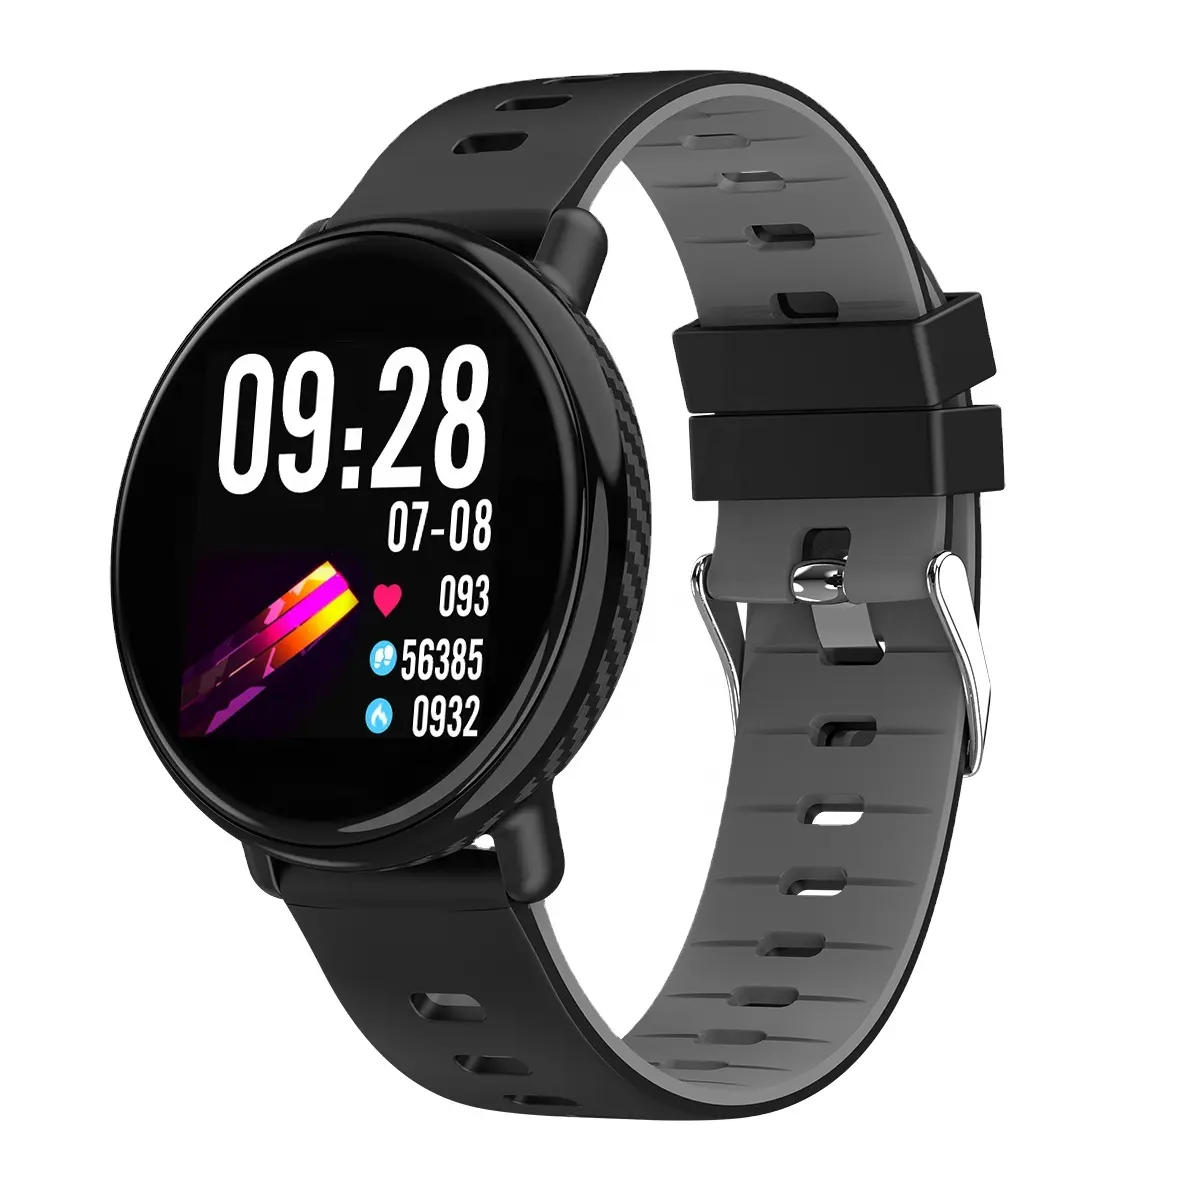 OEM ODM 3D UI Screen K1 Smart Watch Sim Card Watch Phone With Wifi Fitness Blood Heart Rate Monitor IP68 Smart Sport Watch